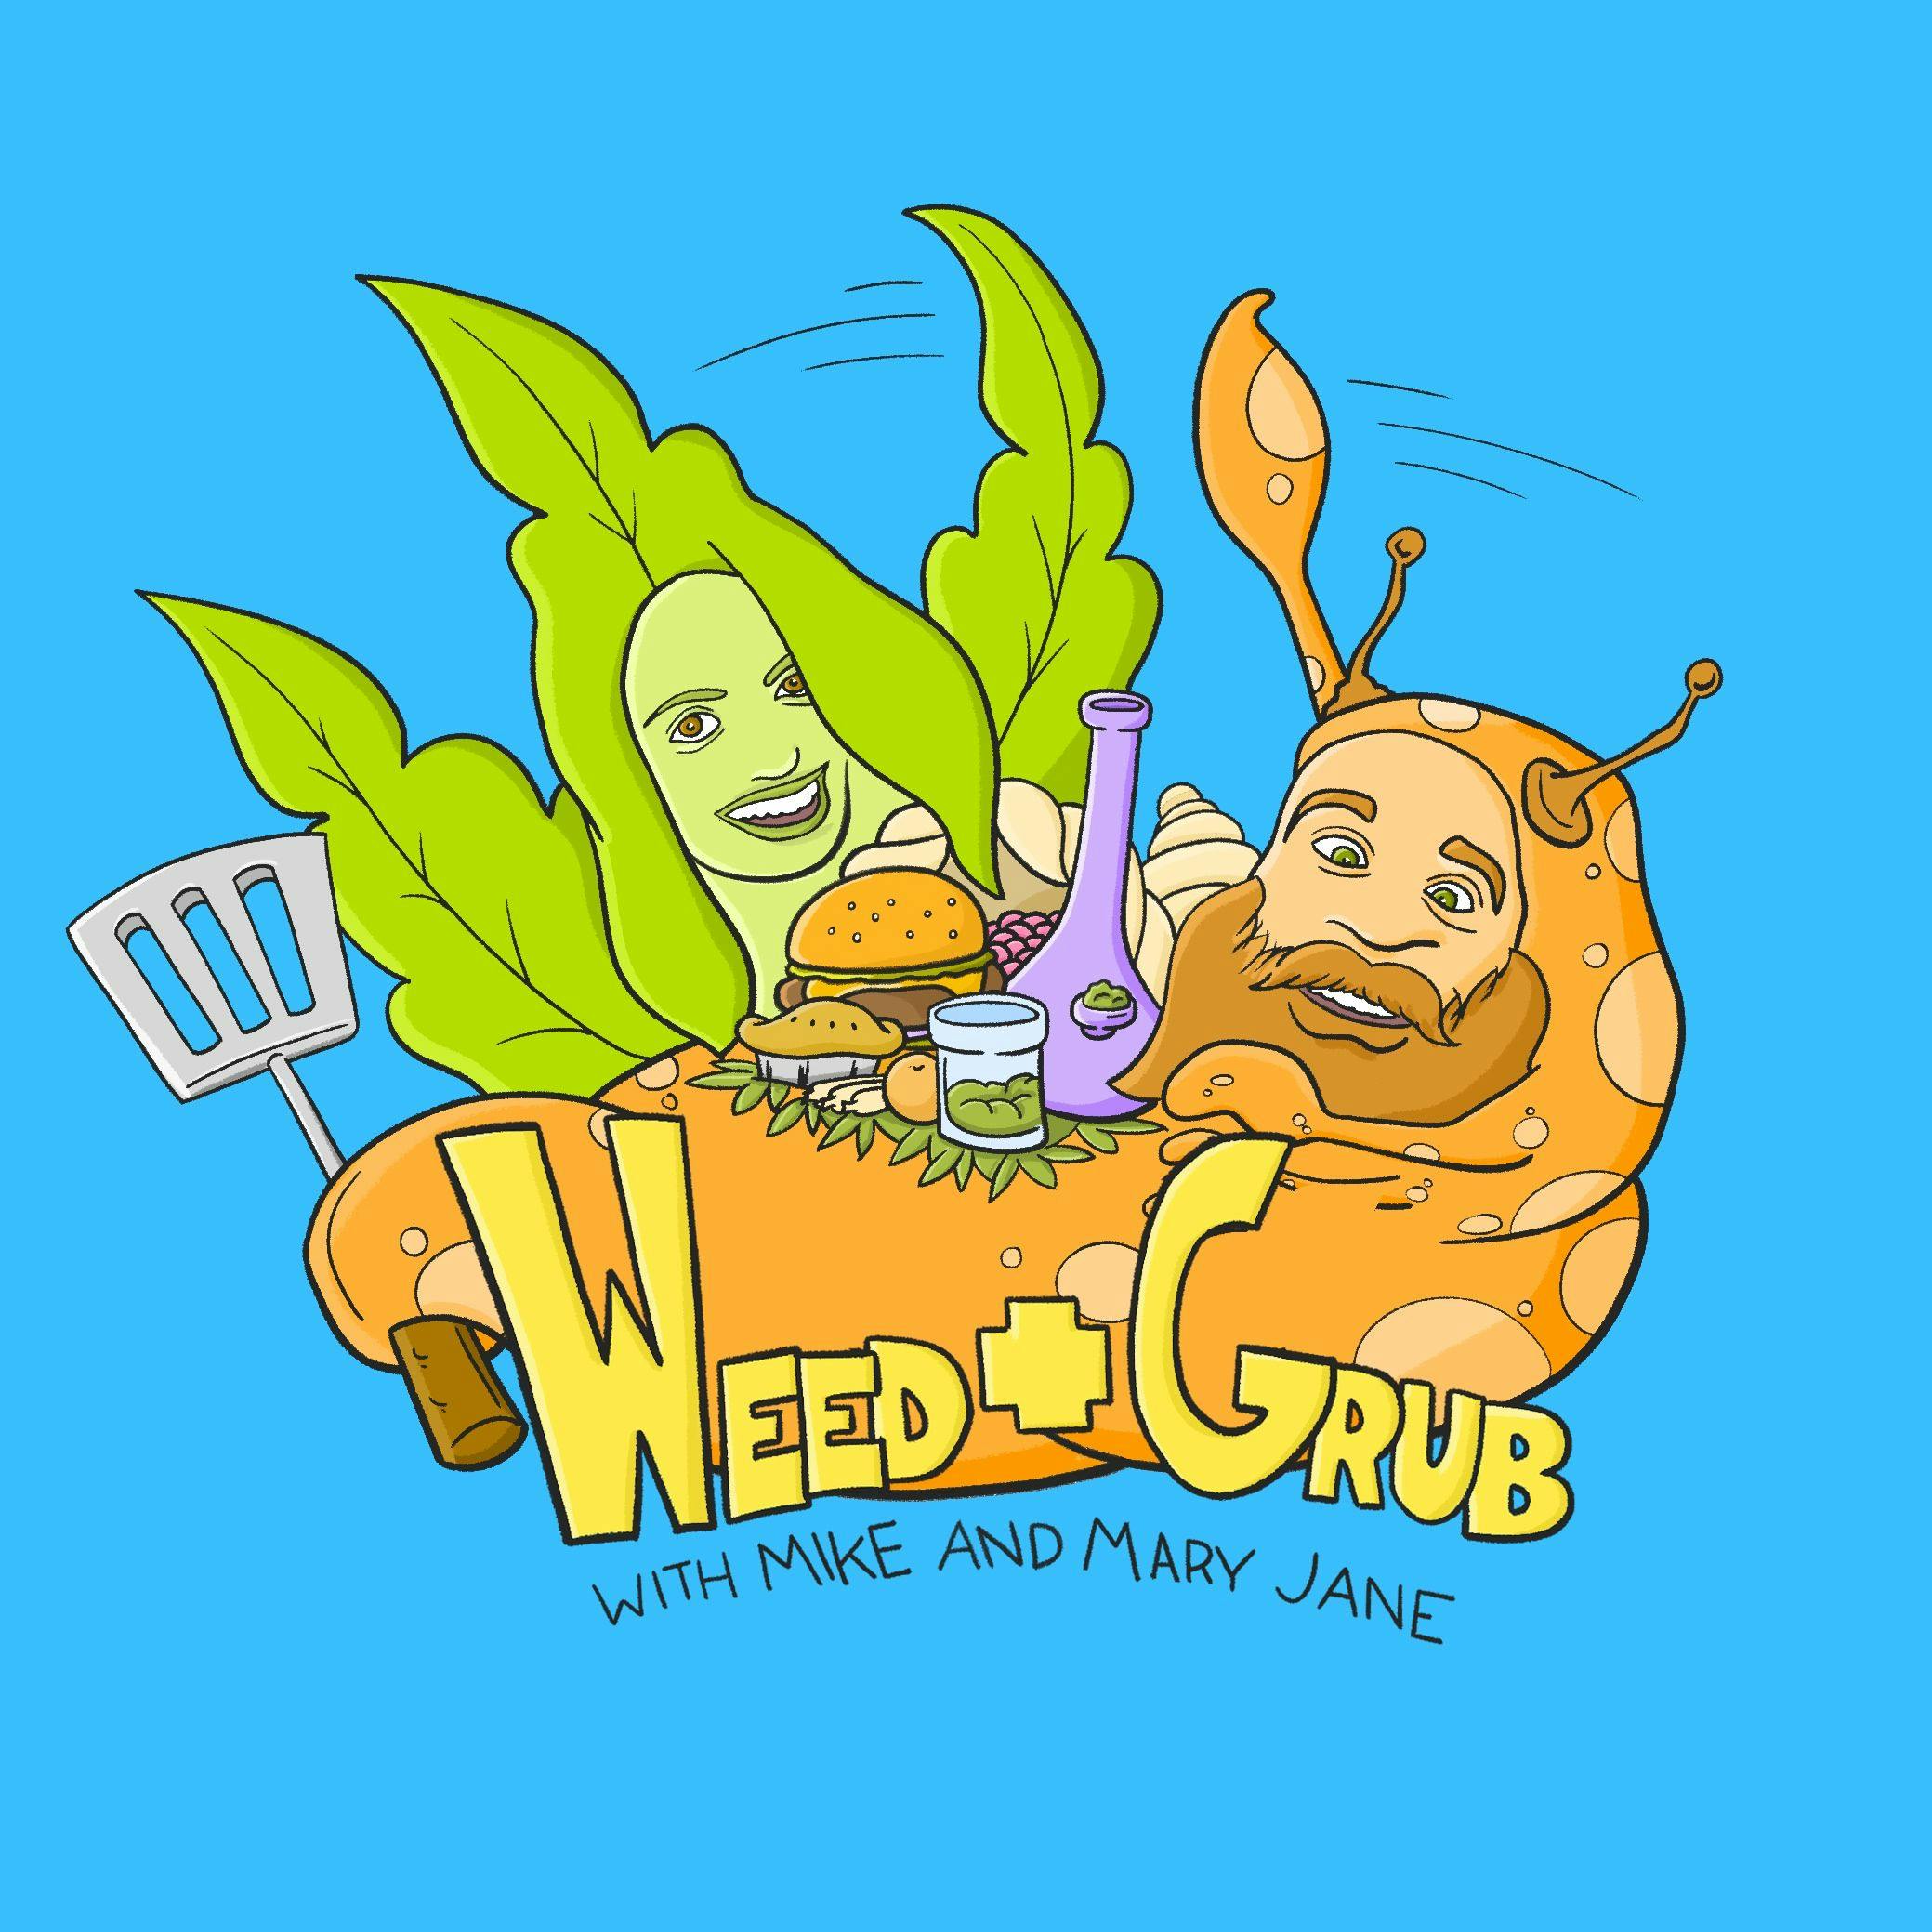 Weed and Grub